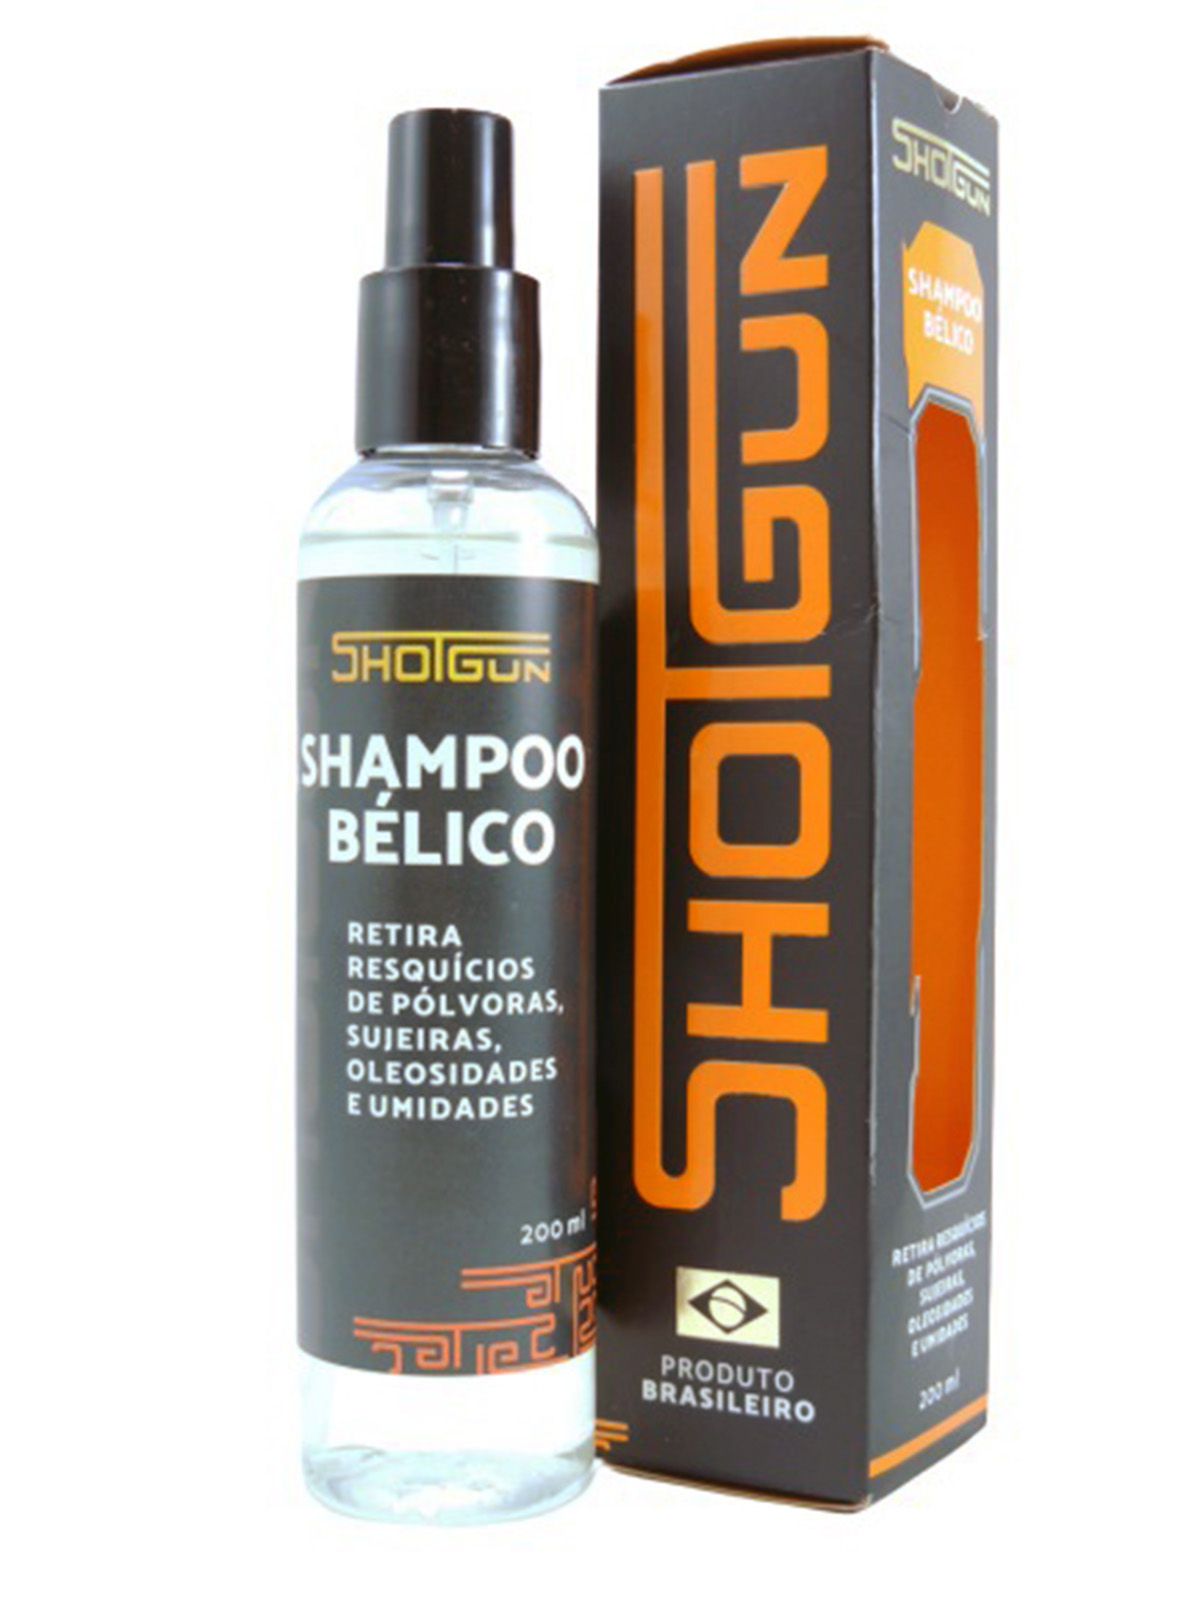 Shampoo Belico Shotgun 200ml